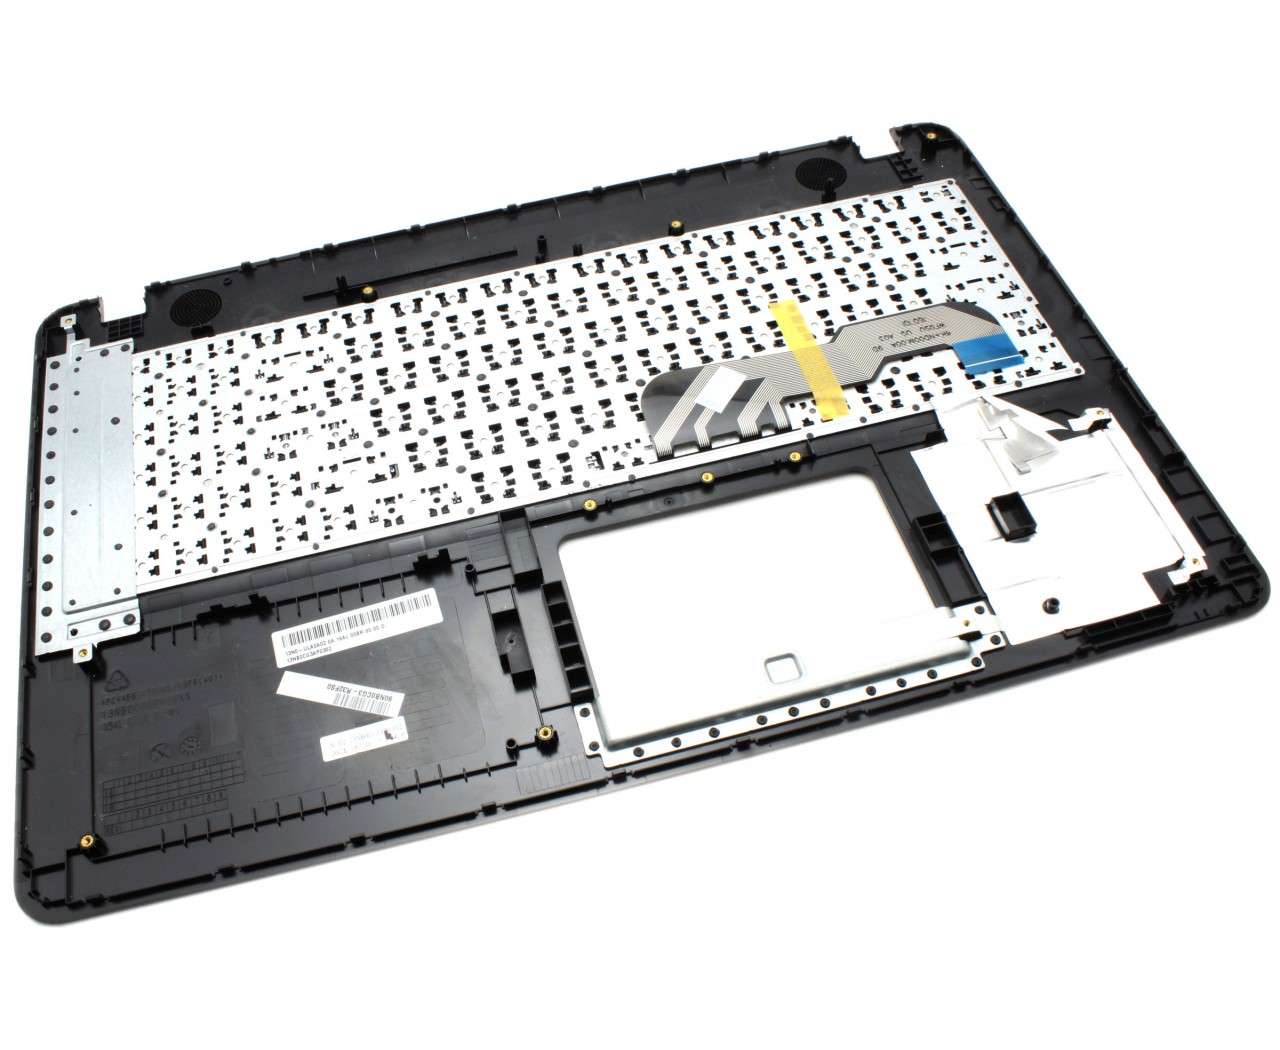 Tastatura Asus F541SA Neagra cu Palmrest Argintiu